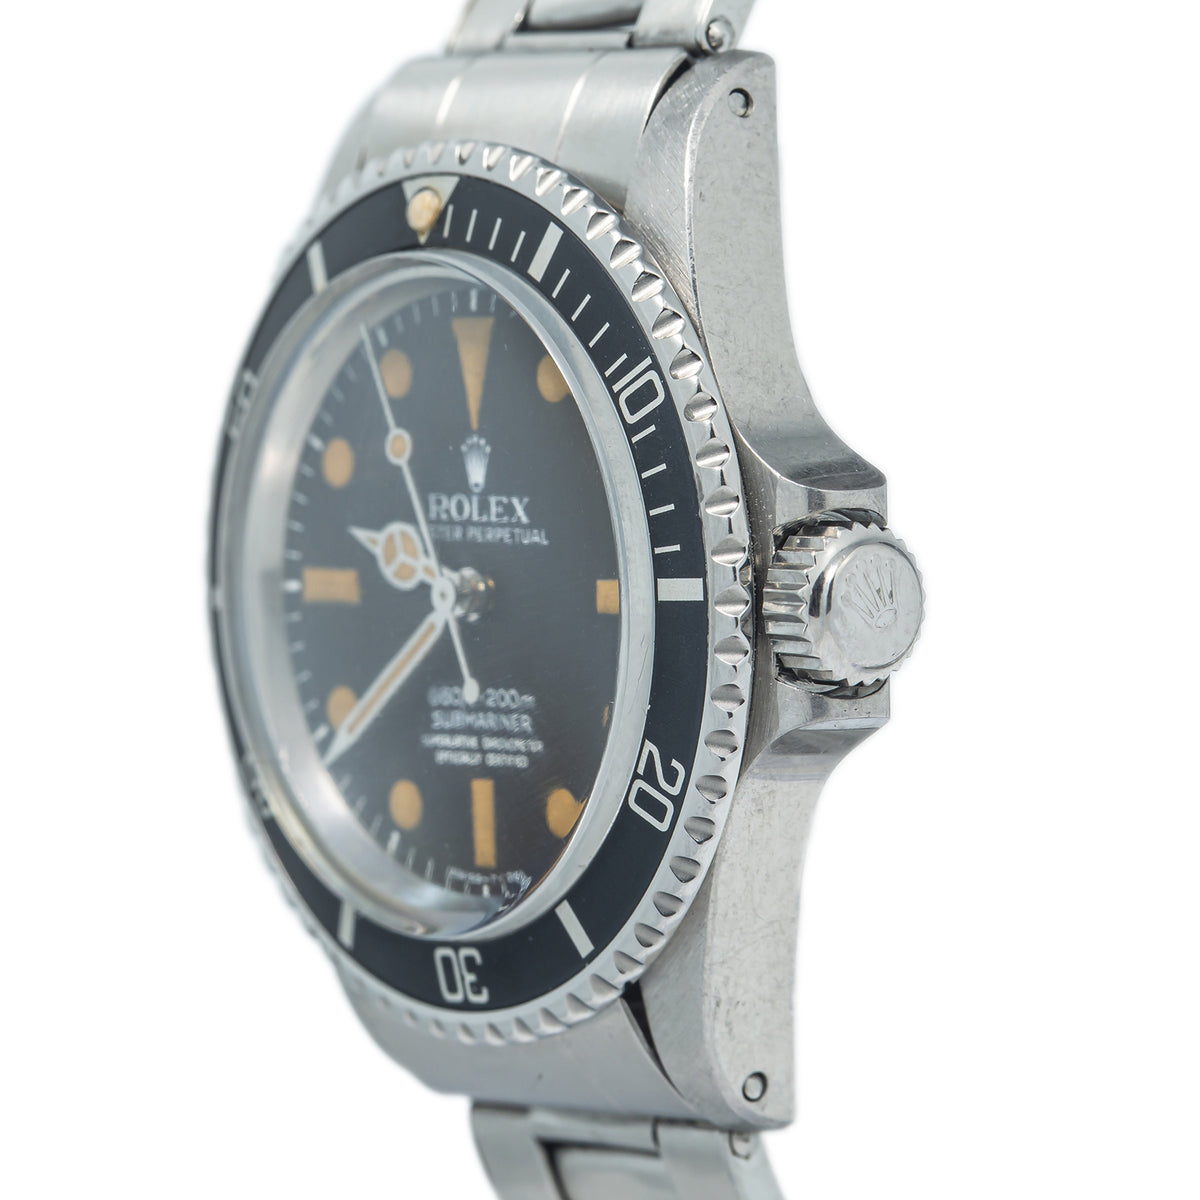 Rolex Submariner 5512 1968 Unpolished Zinc Sulfide Black Matte Dial Watch 40mm